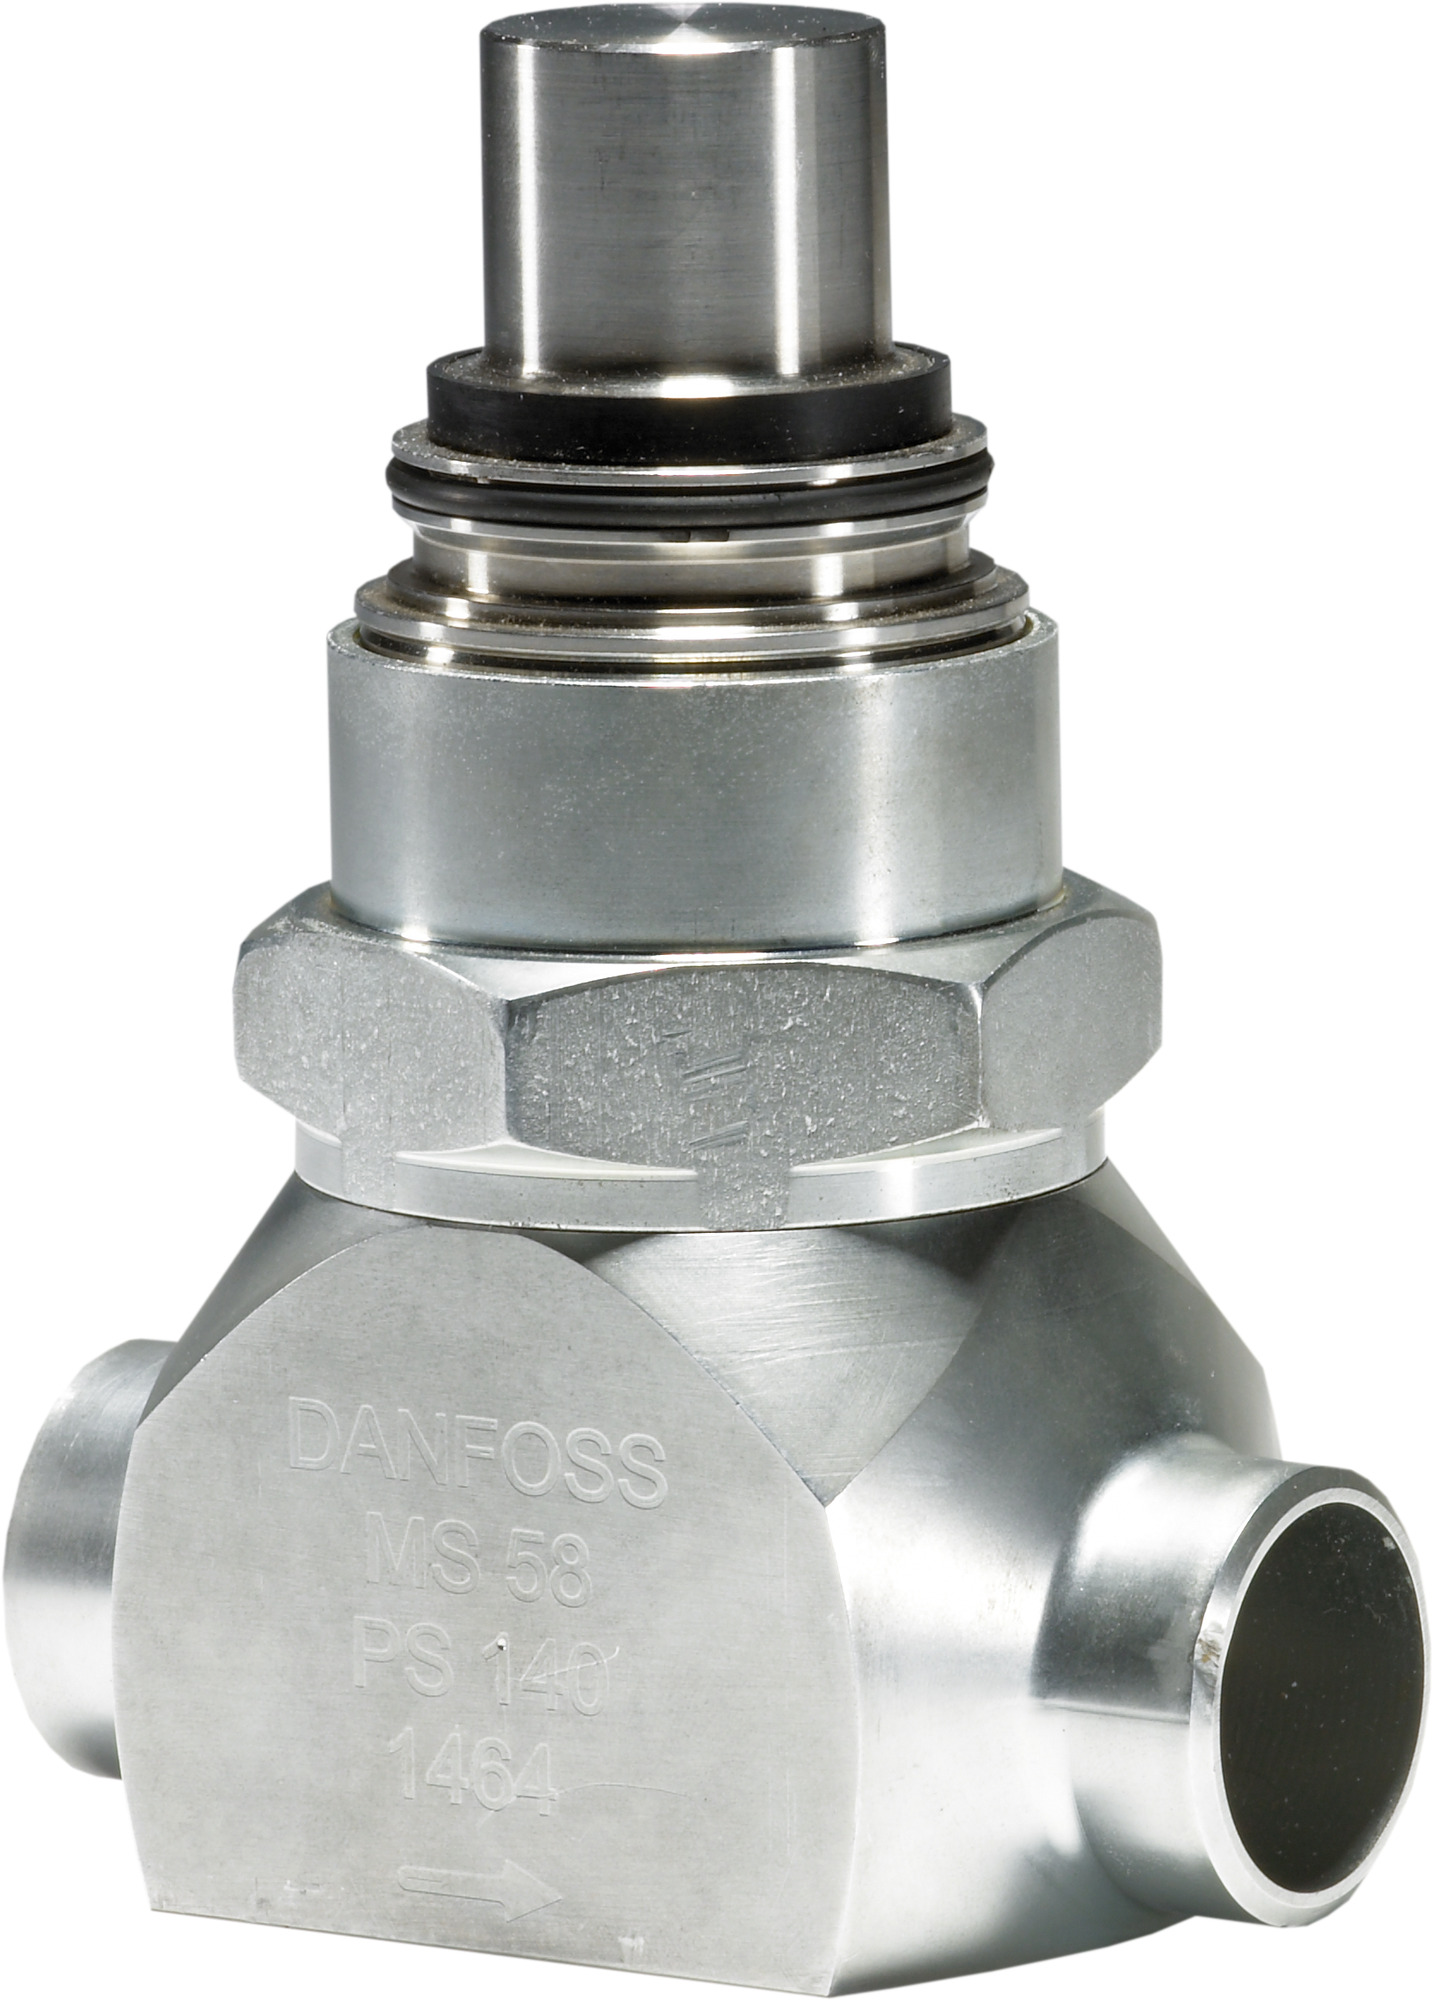 Motor operated valve, ICMTS 20B, Steel